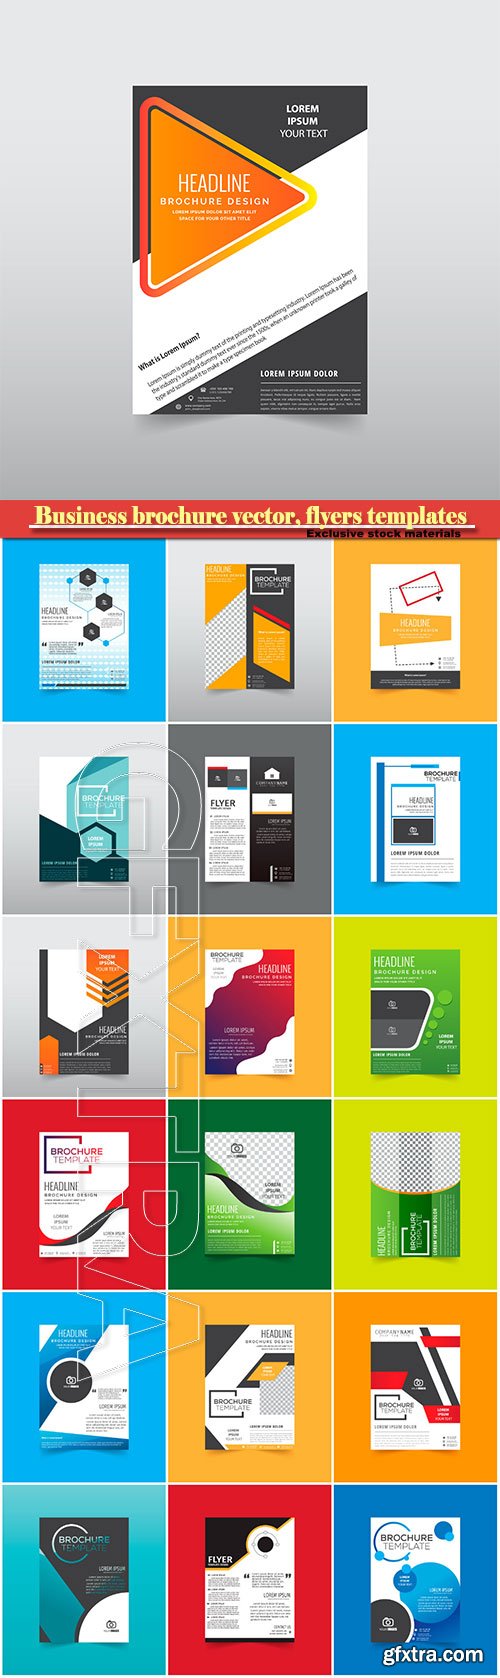 Business brochure vector, flyers templates # 32